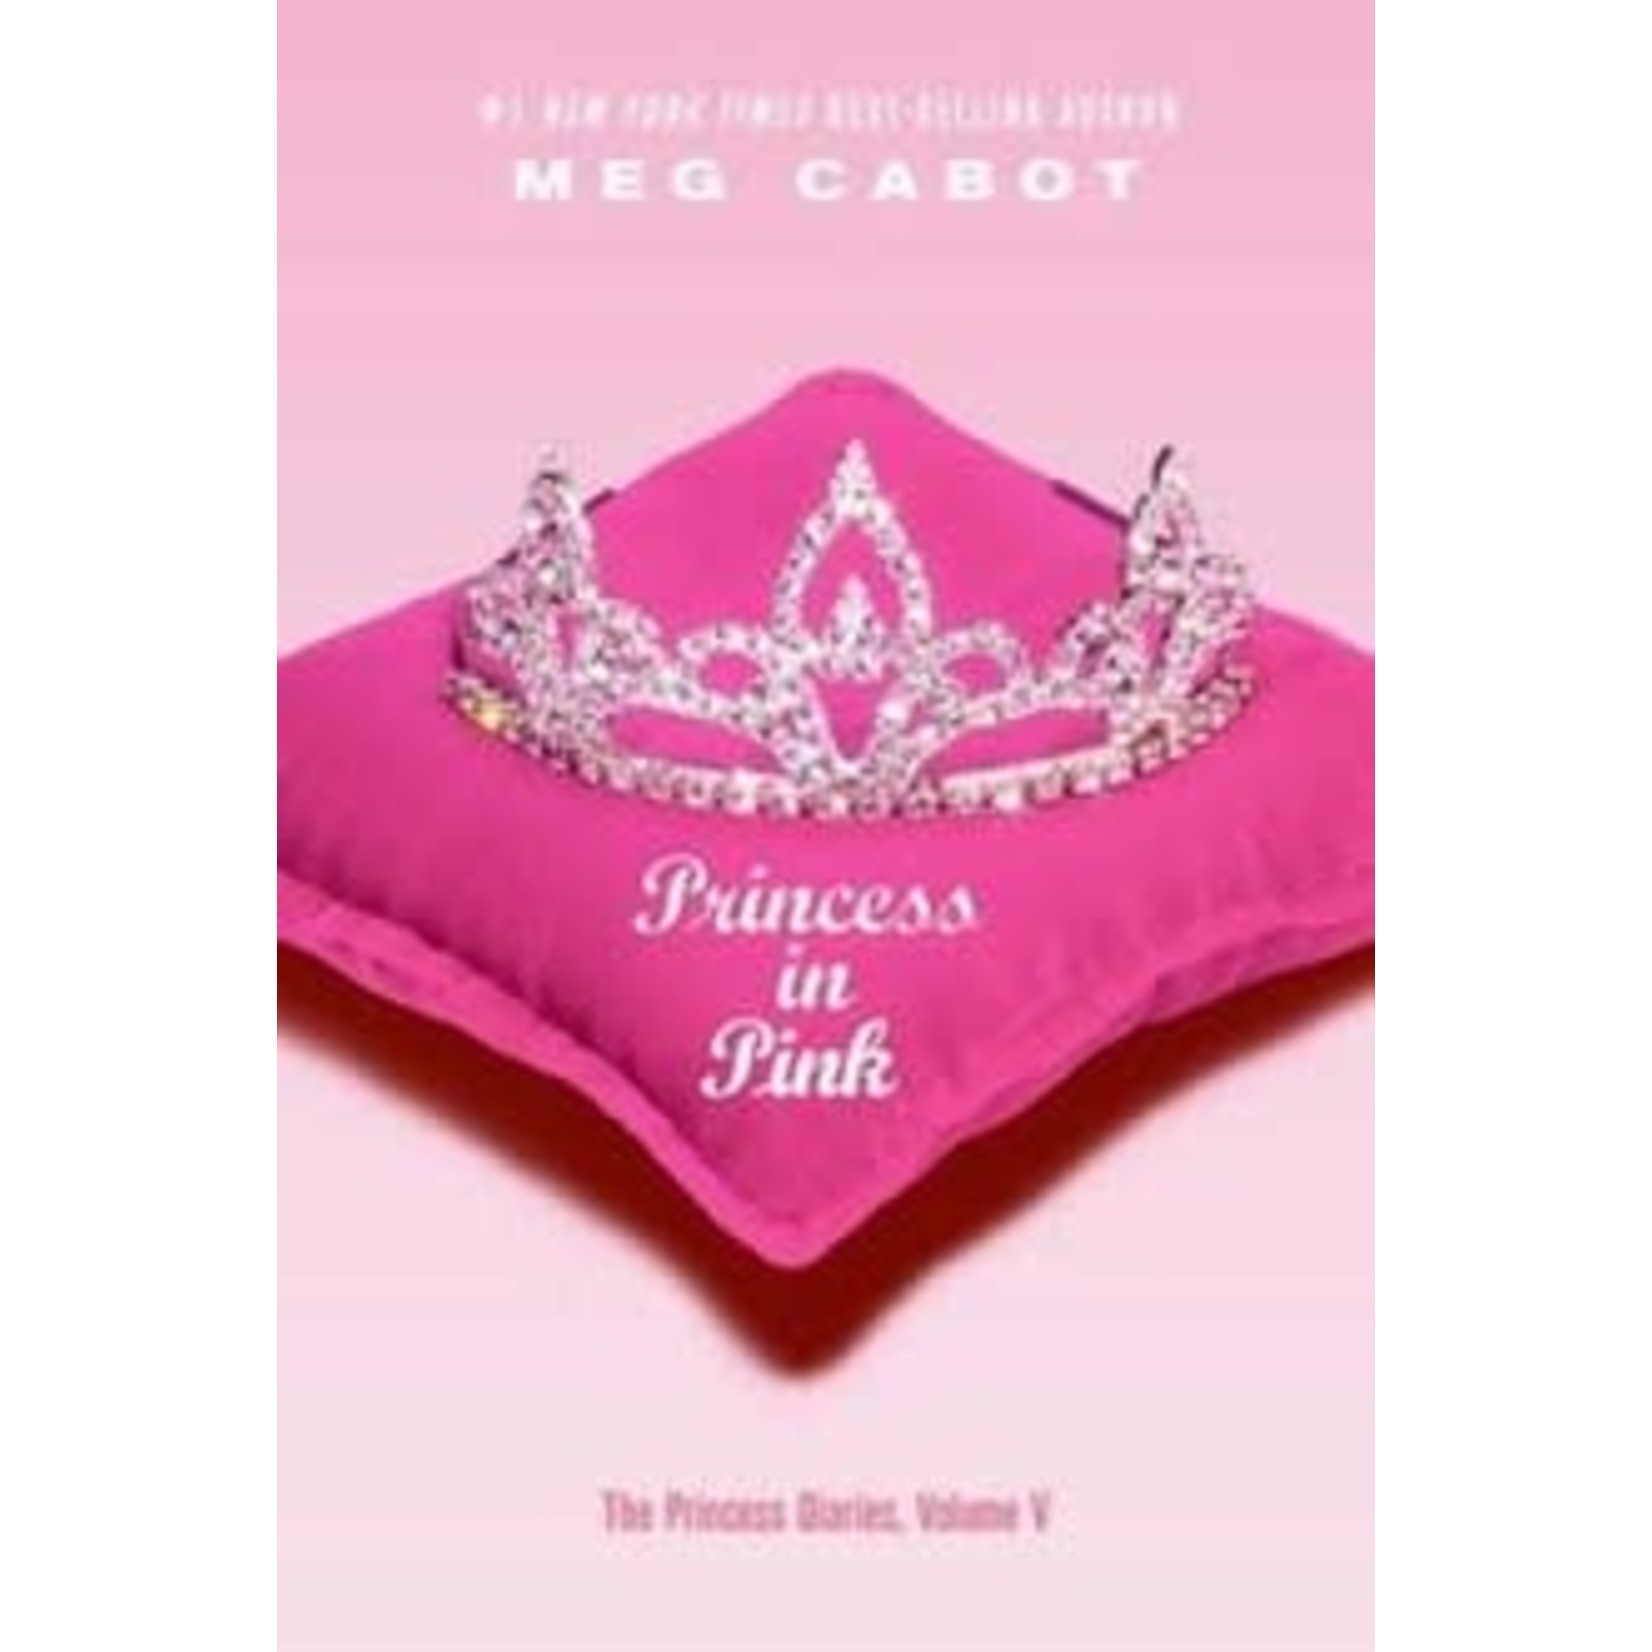 Meg Cabot Princess in Pink, The Princess Diaries, Volume V